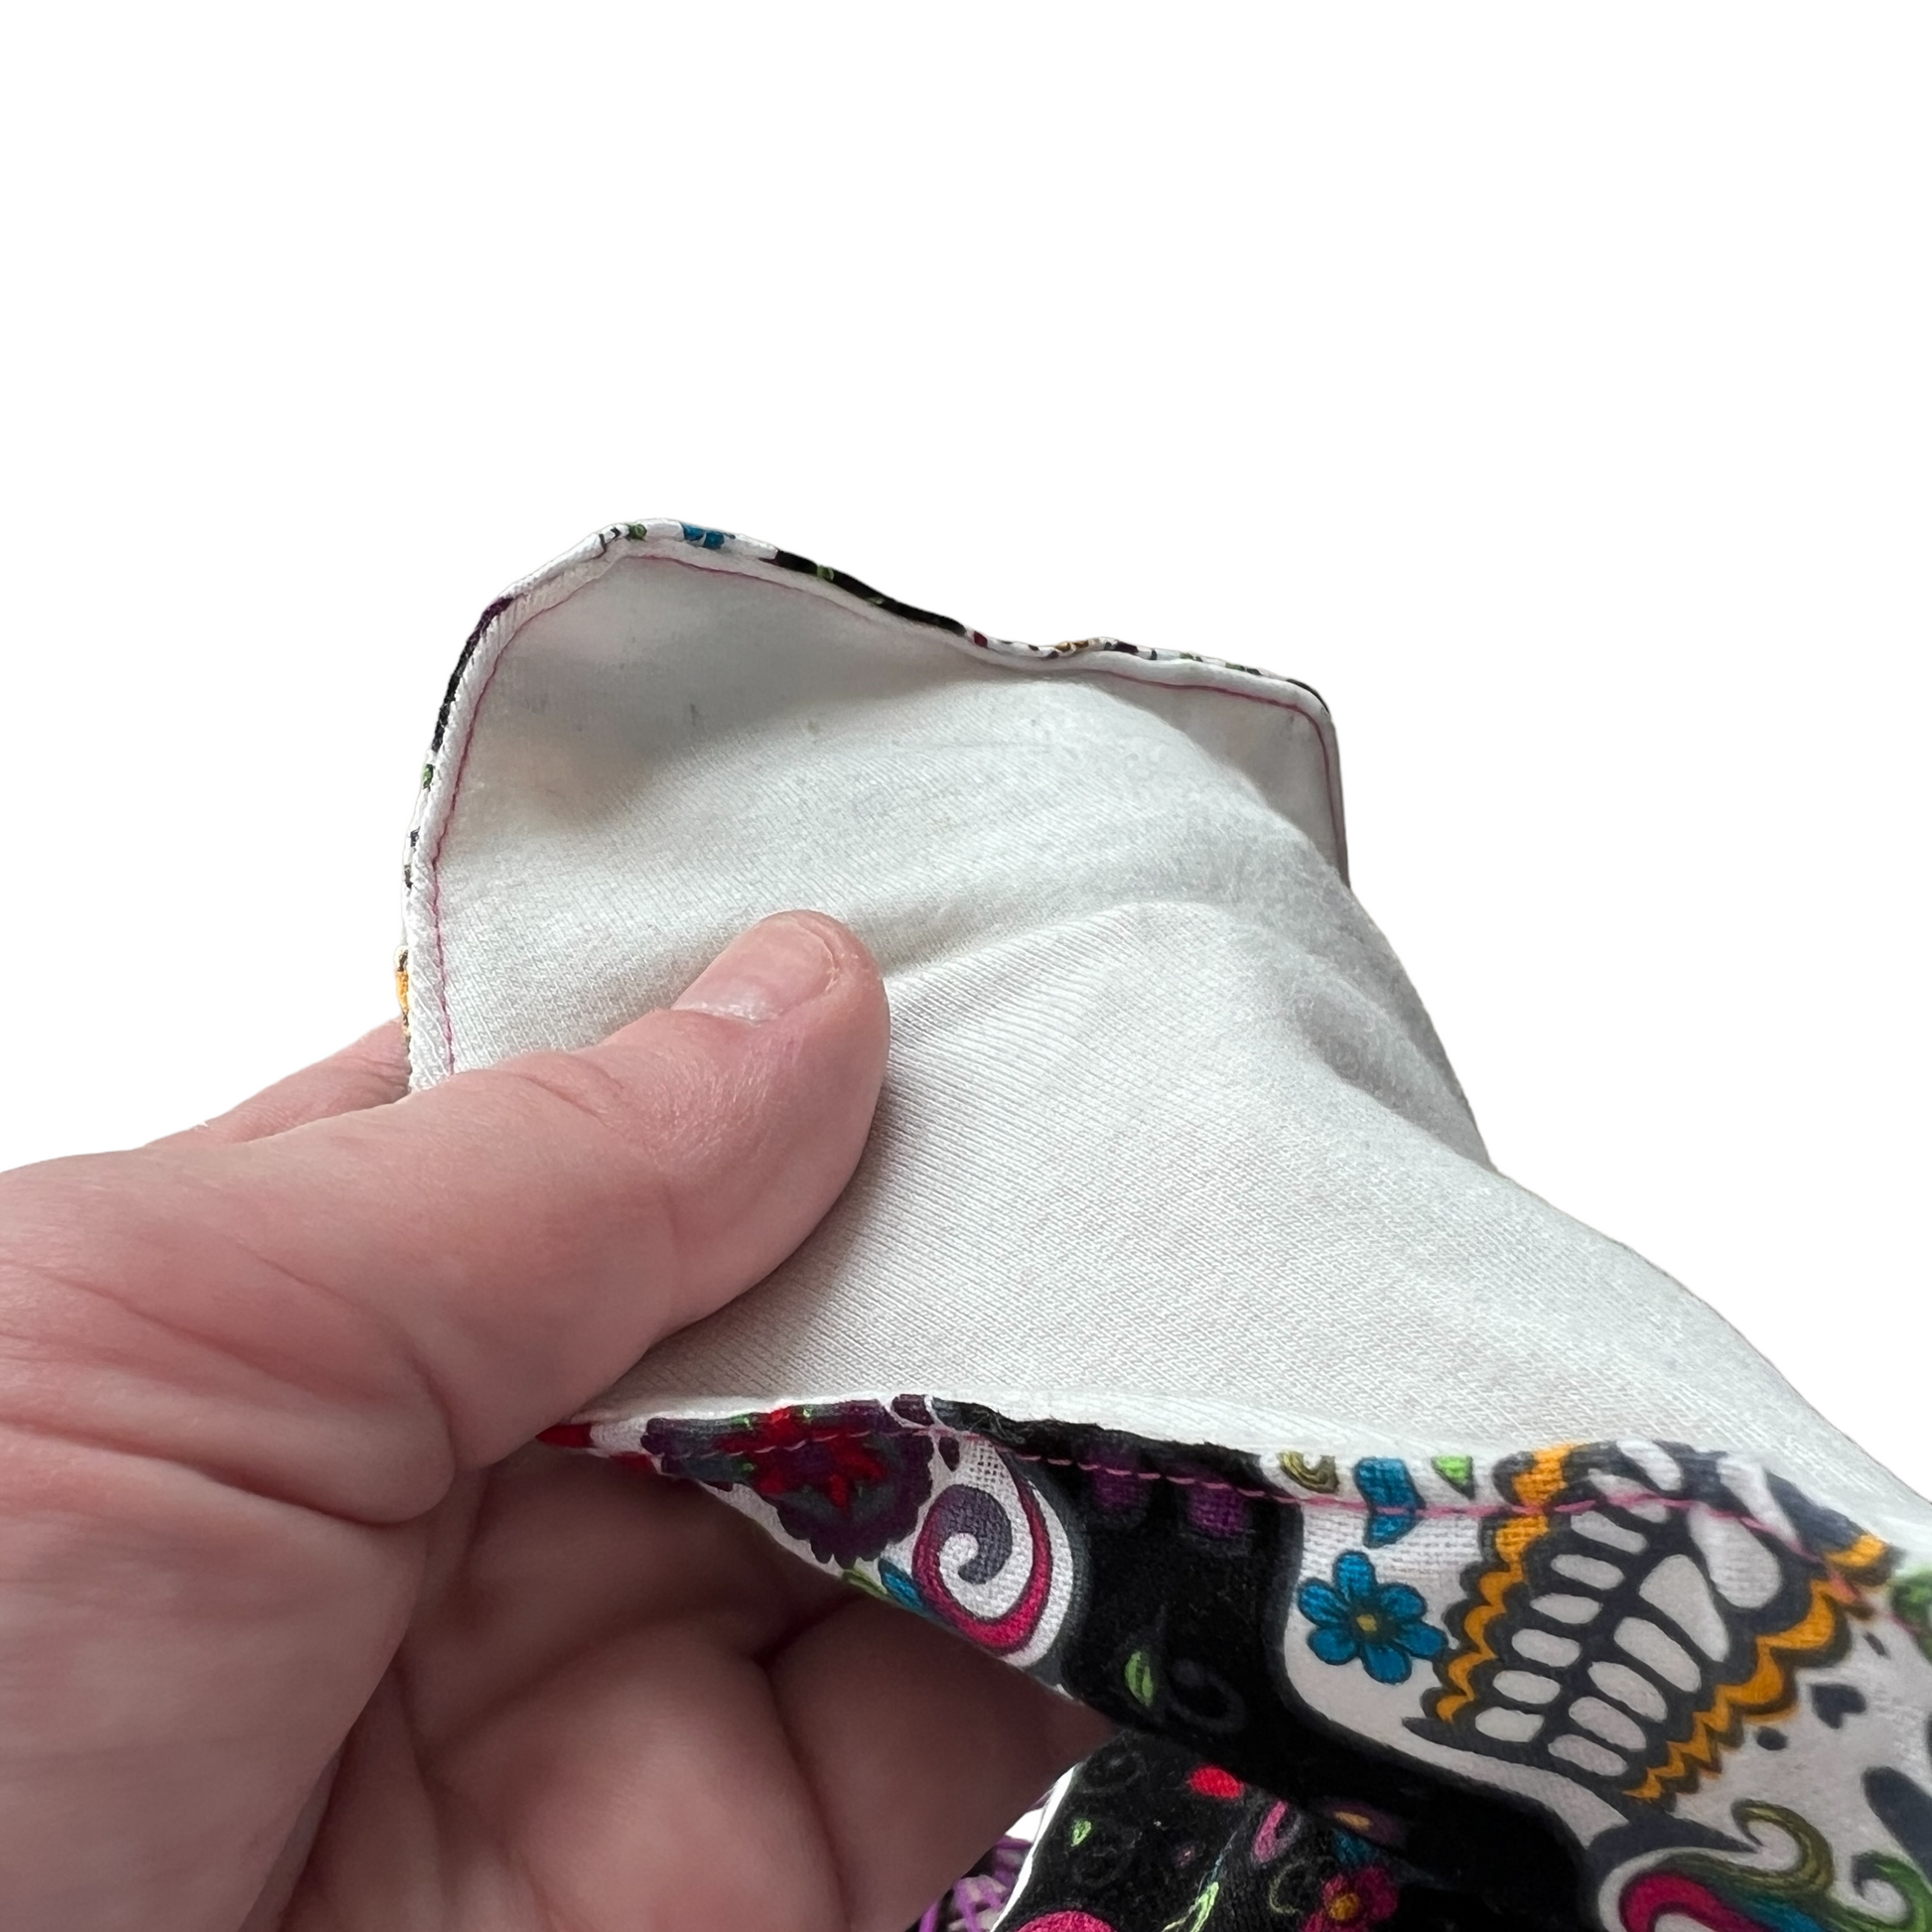 Ostomy Bag Covers Ostomy Supplies SPIRIT SPARKPLUGS BY DESIGN   